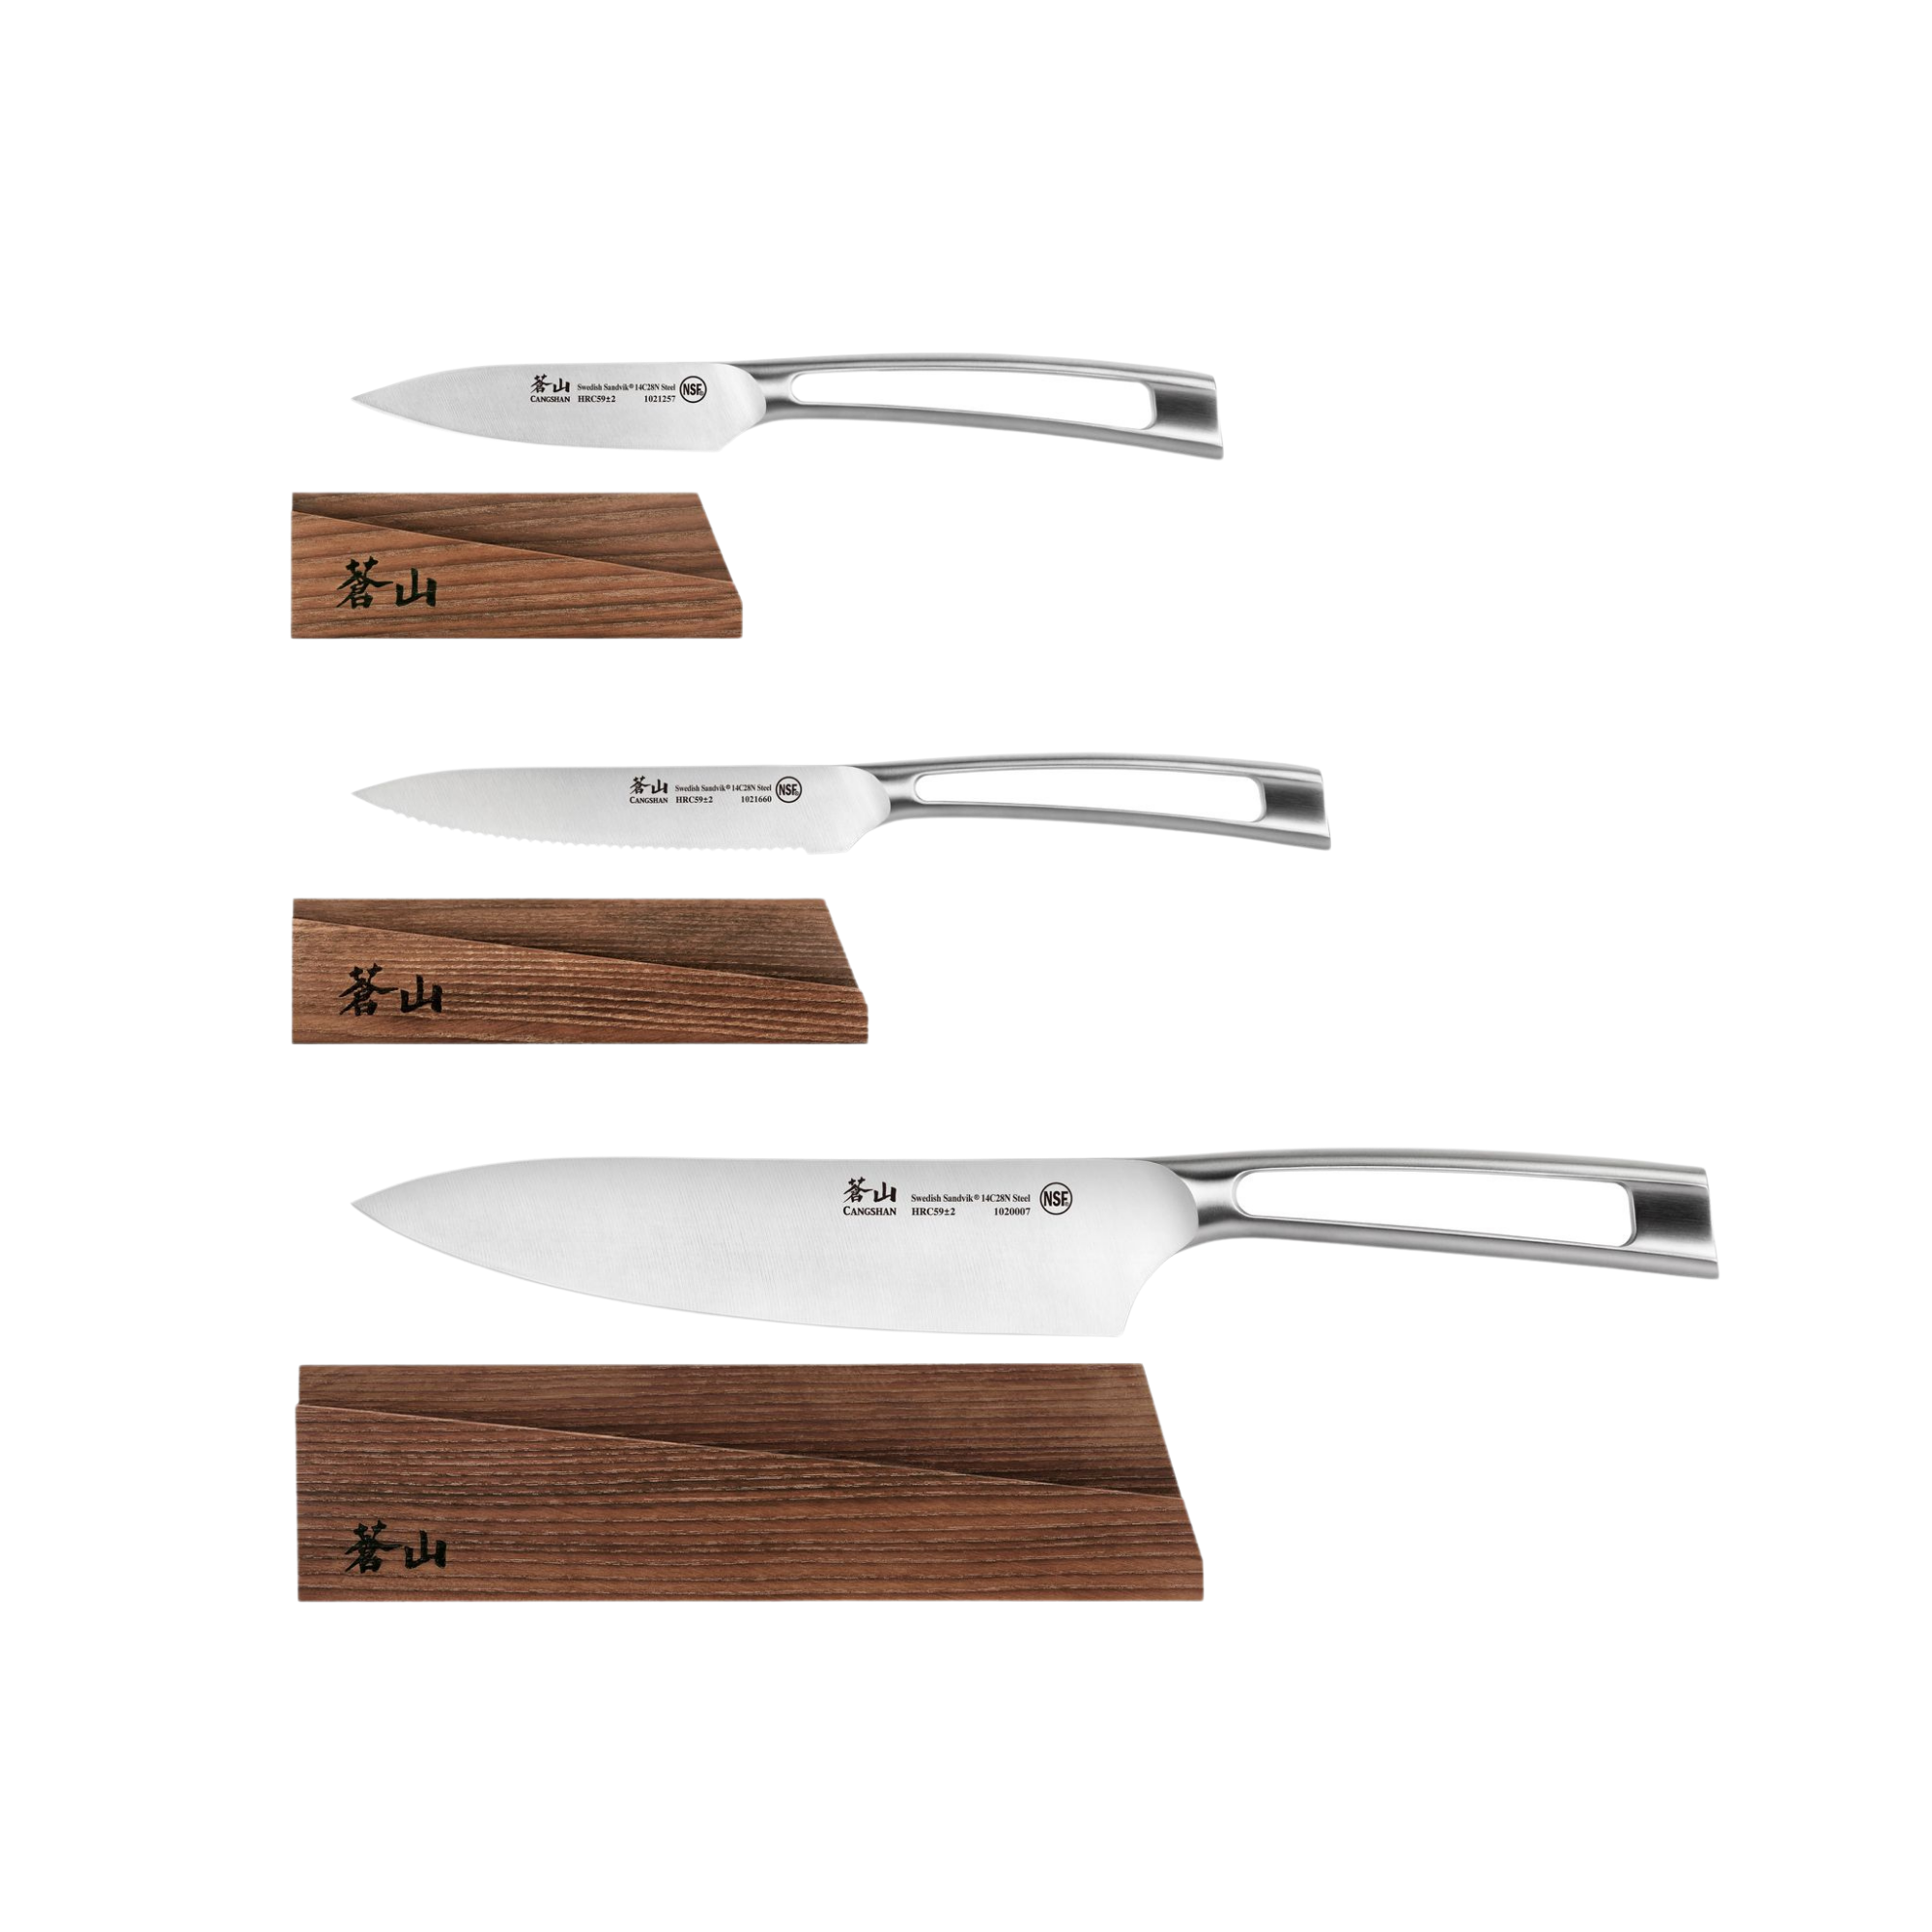 Cangshan Adjustable Knife Sharpener, 3 Stage - Spoons N Spice